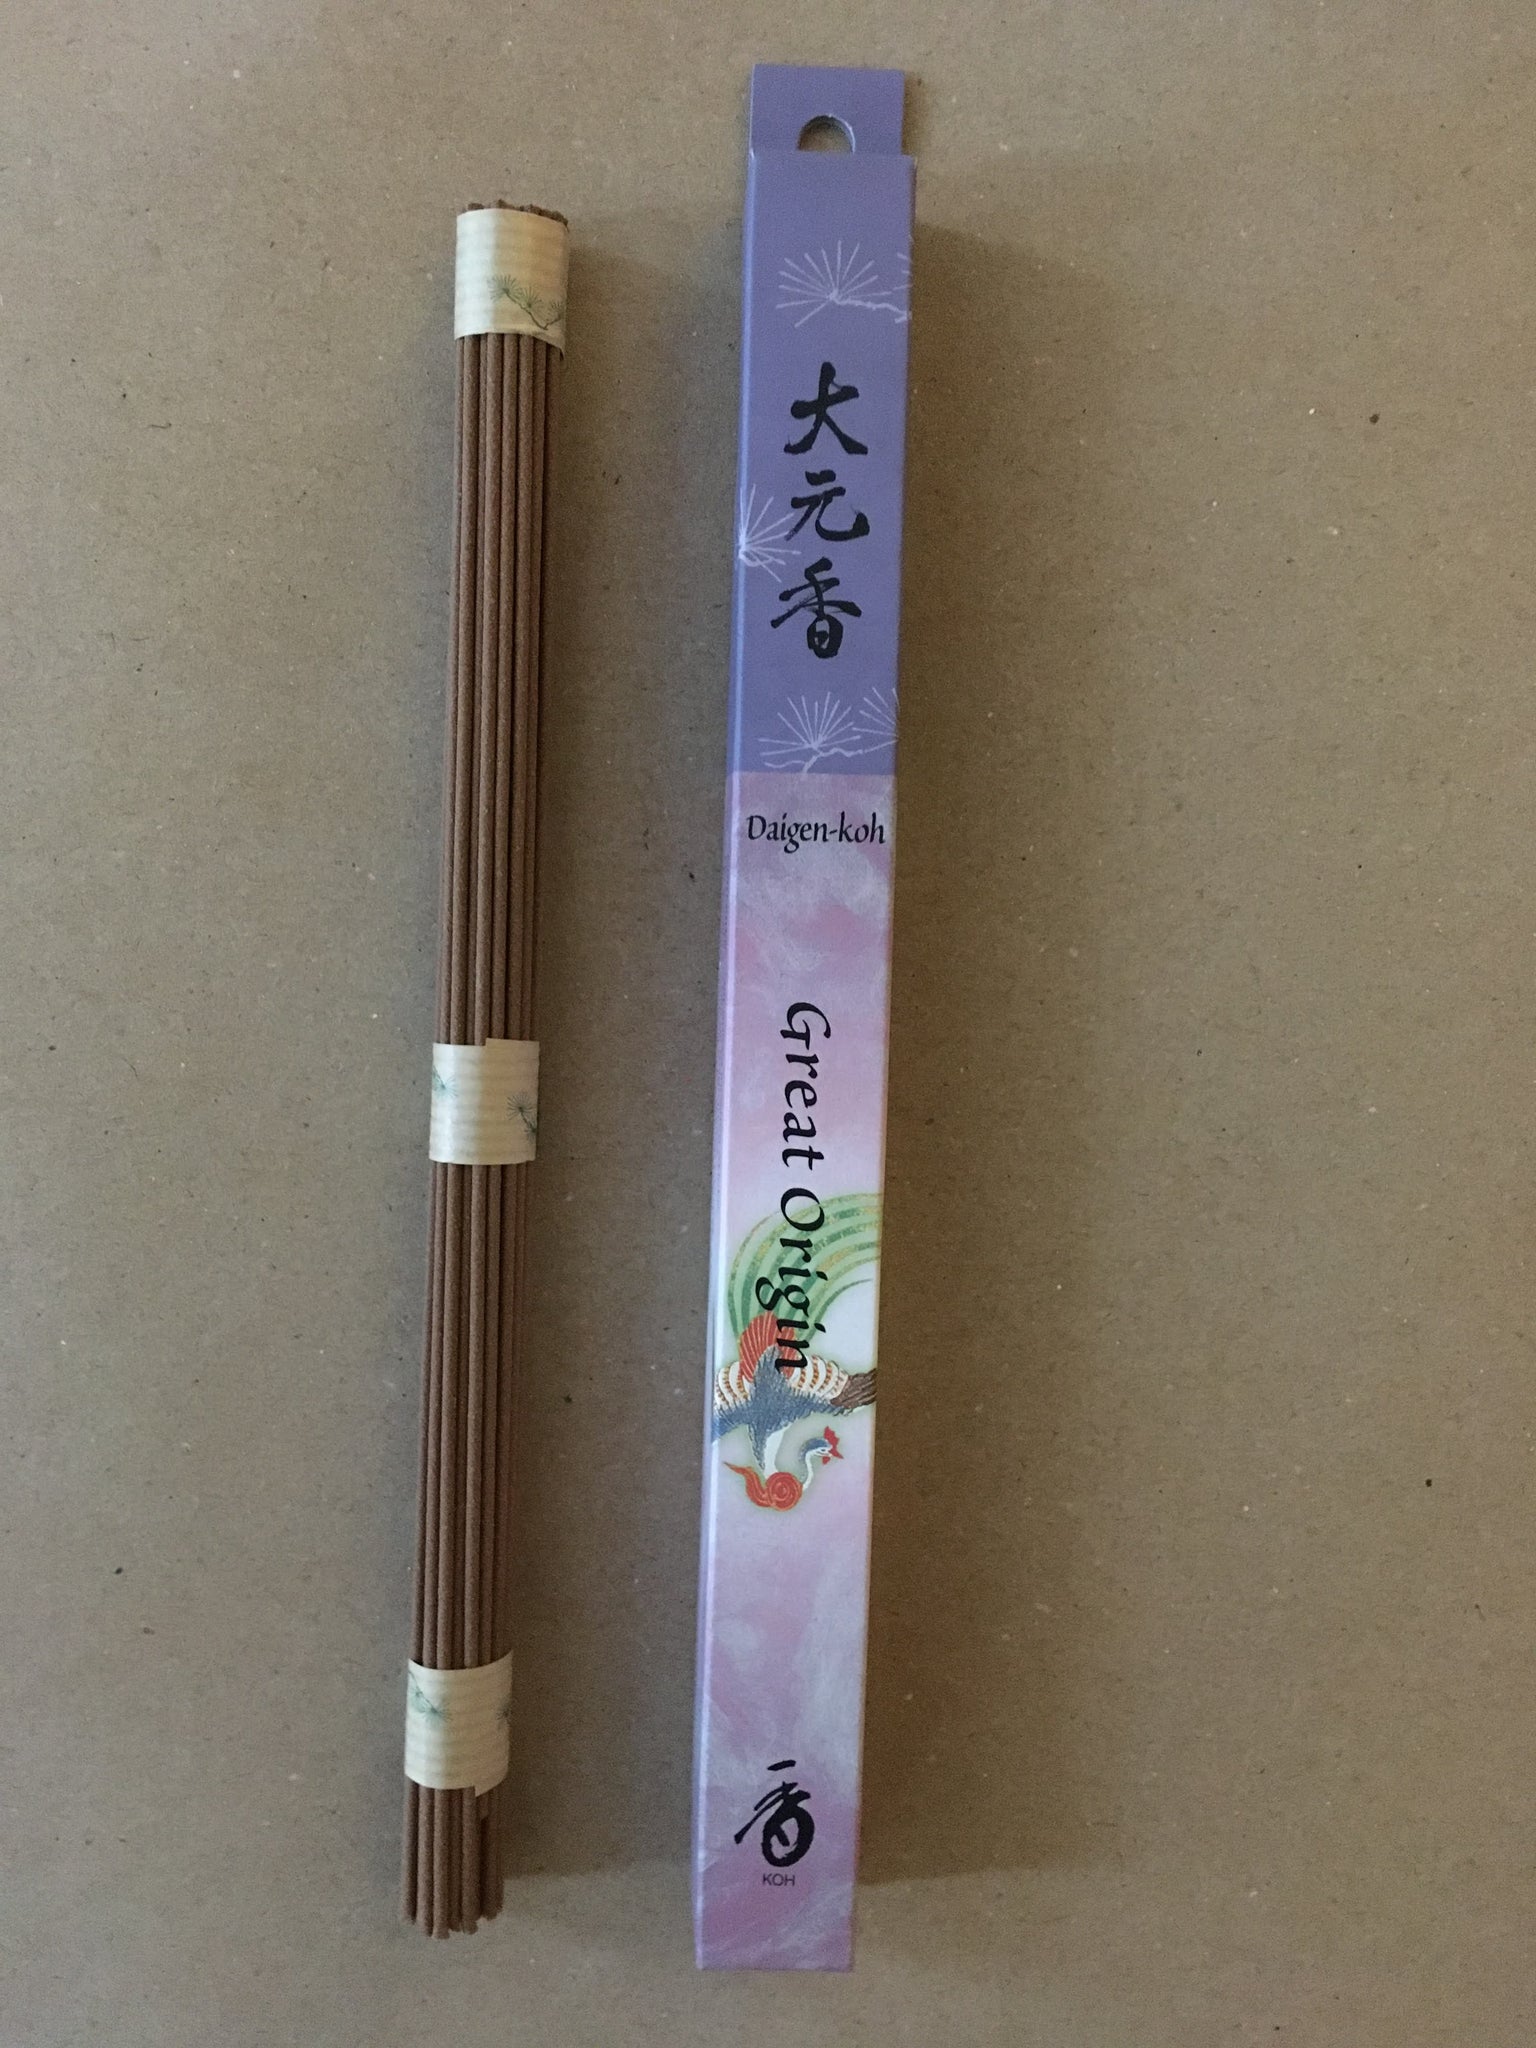 Great Origin, Daigen-koh | Daily Incense by Shoyeido